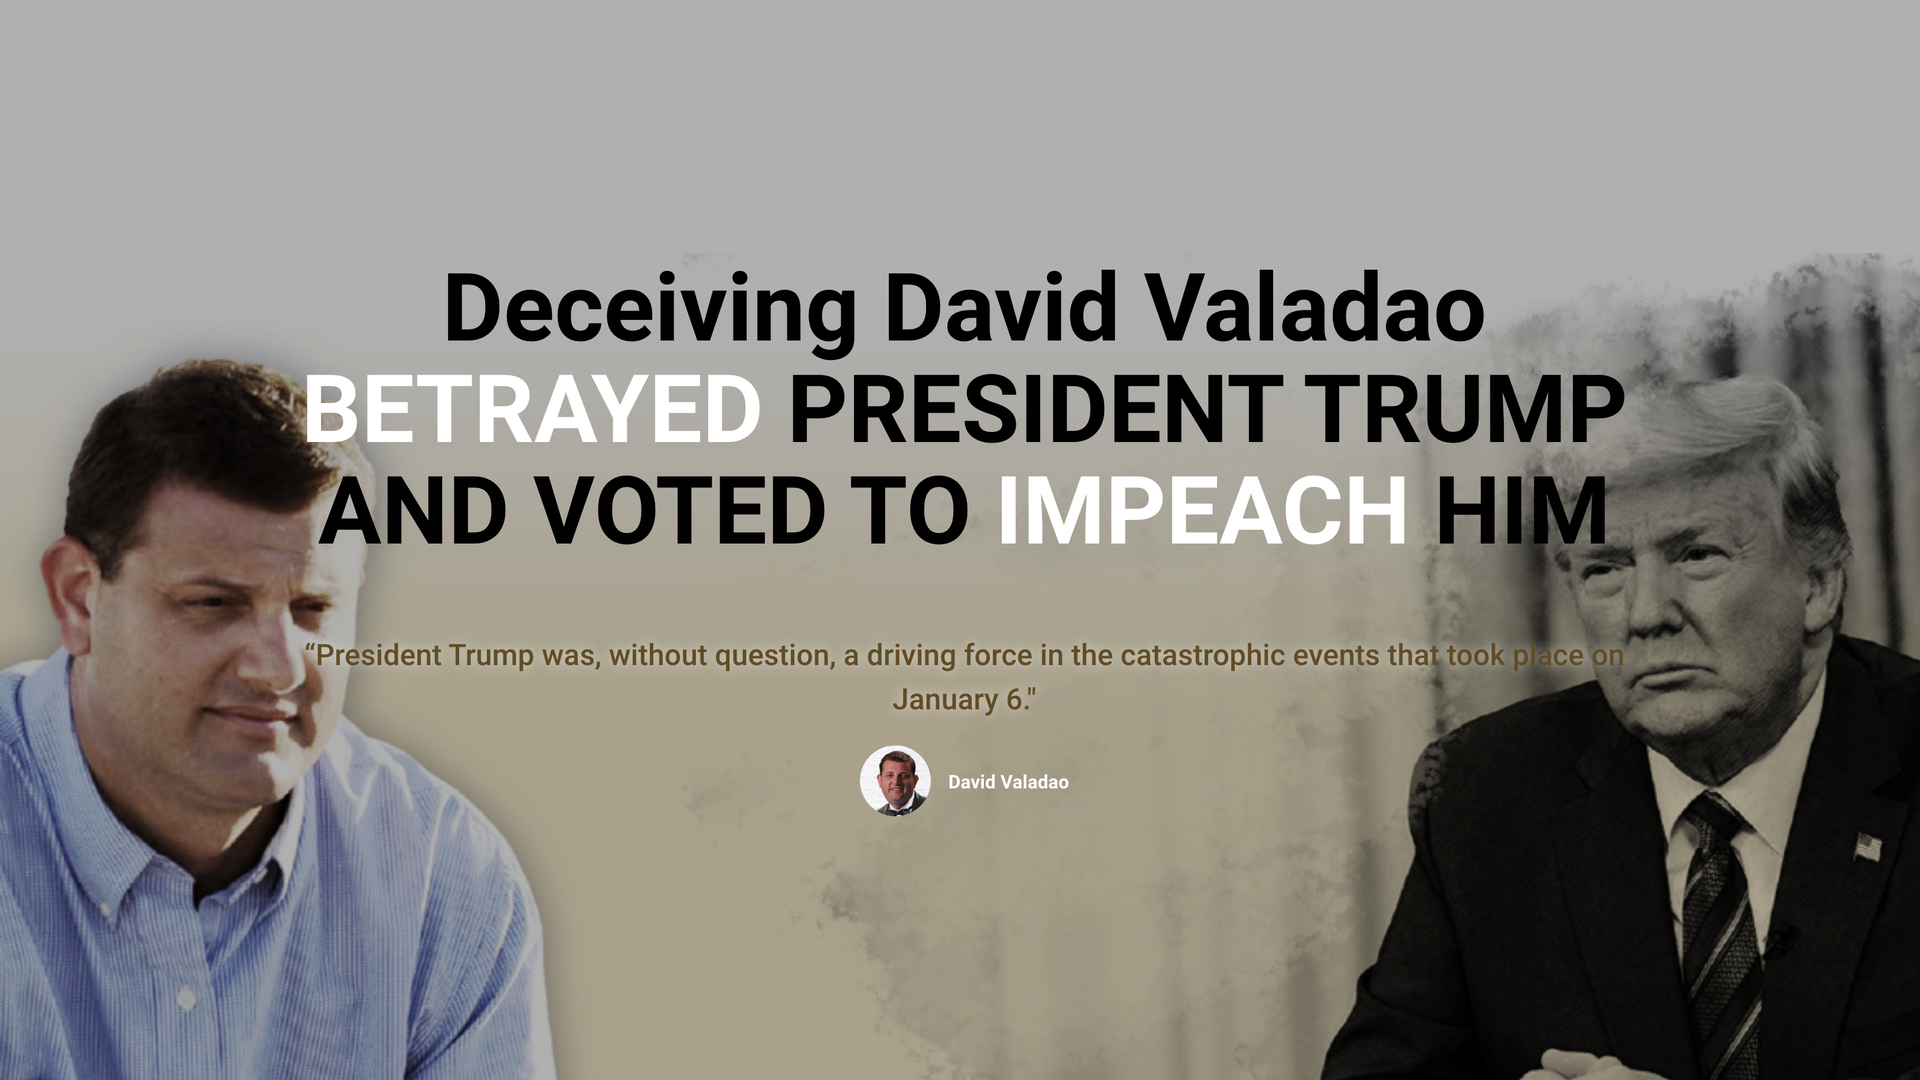 A screenshot of a website attacking Republican David Valadao as a "traitor" to Donald Trump.